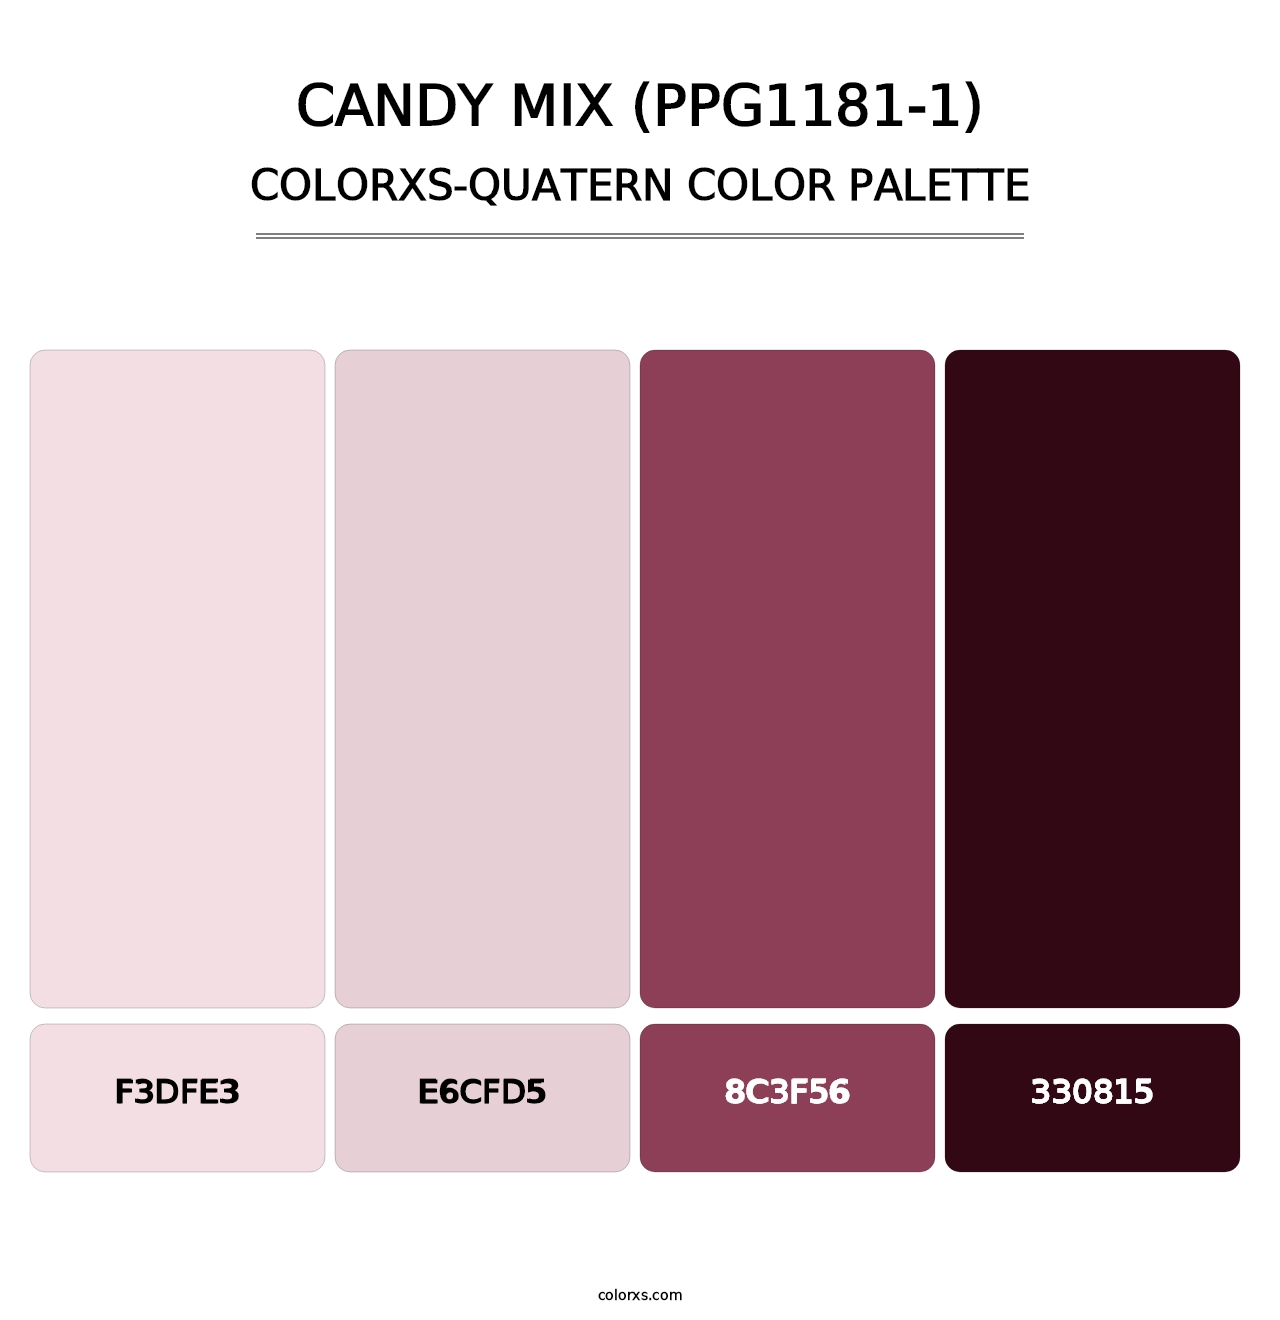 Candy Mix (PPG1181-1) - Colorxs Quatern Palette